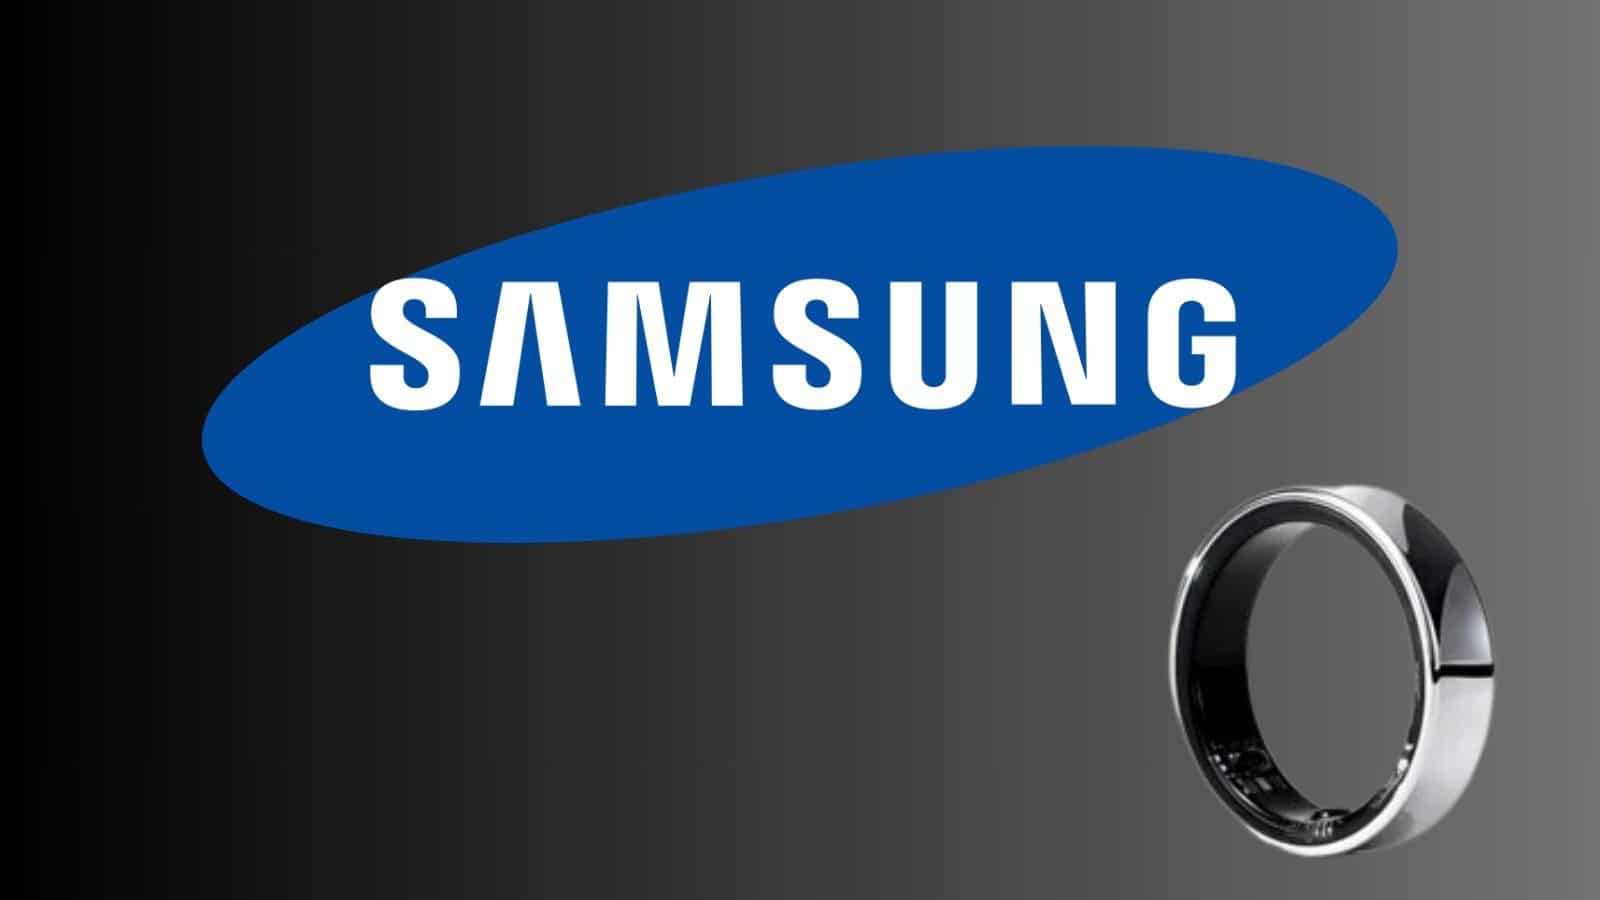 Galaxy Ring: grazie a Samsung Health scoperte nuove funzioni